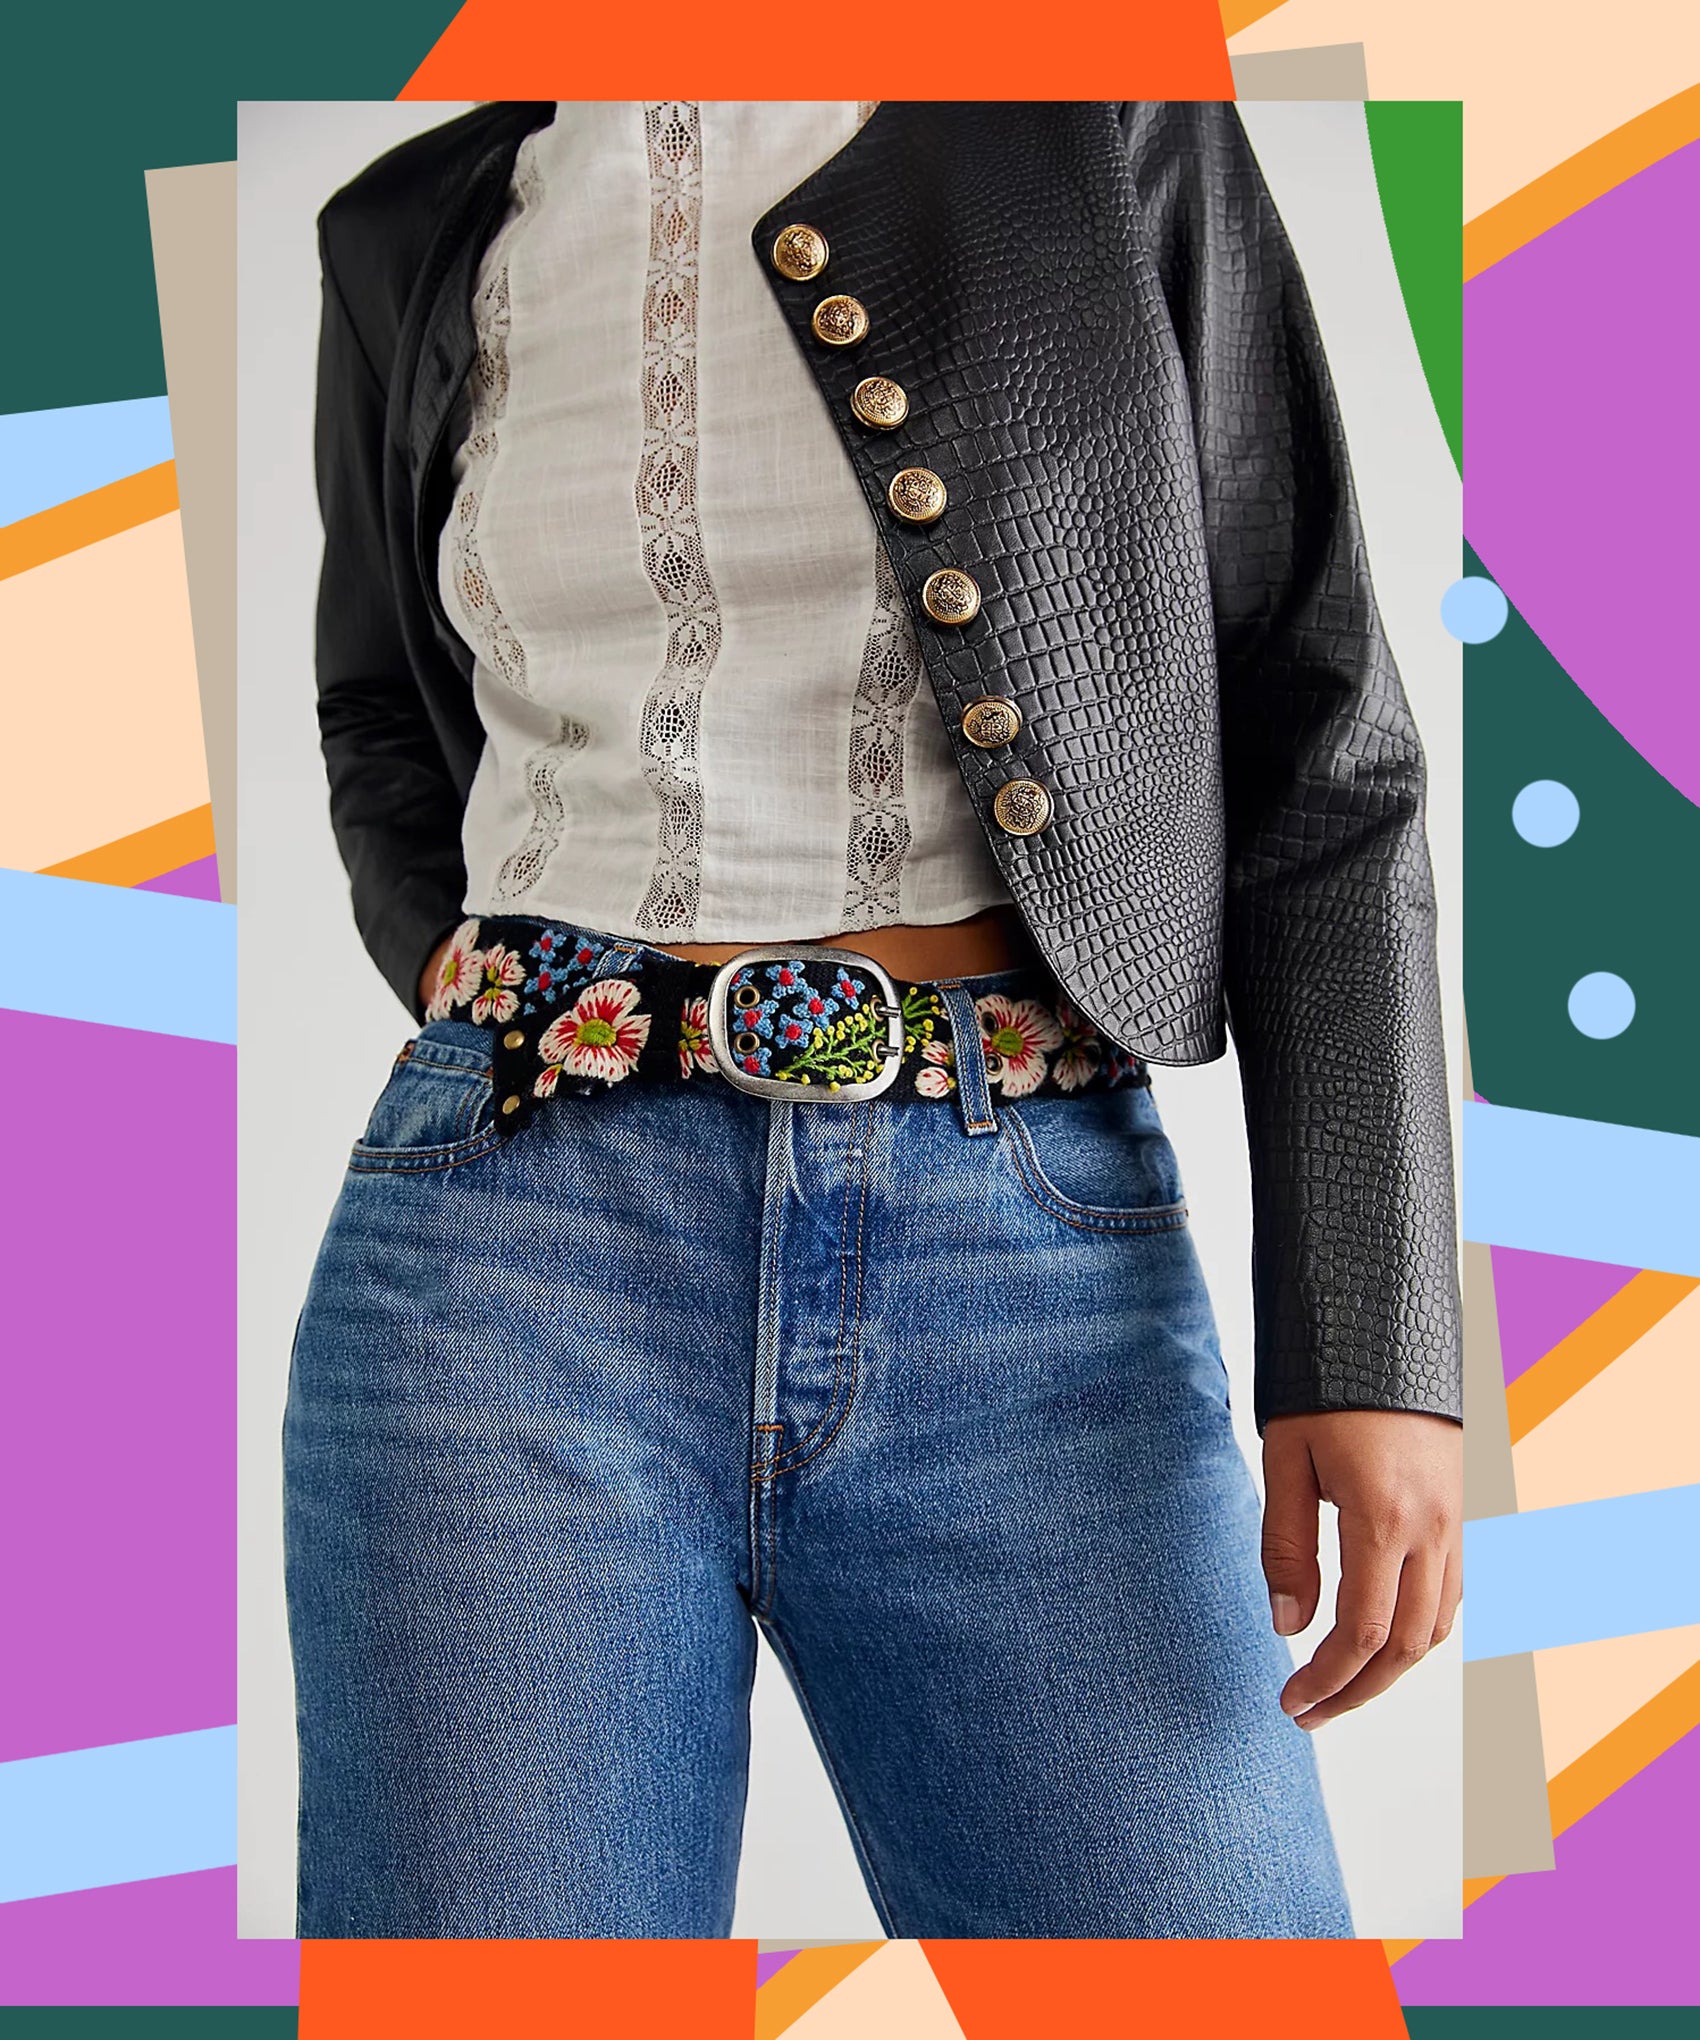 Metal Snakeskin Print Belt Cut Out Metal Buckle Belt For Women Cowgirl  Waist Belt For Pants Jeans Dresses, Find Great Deals Now